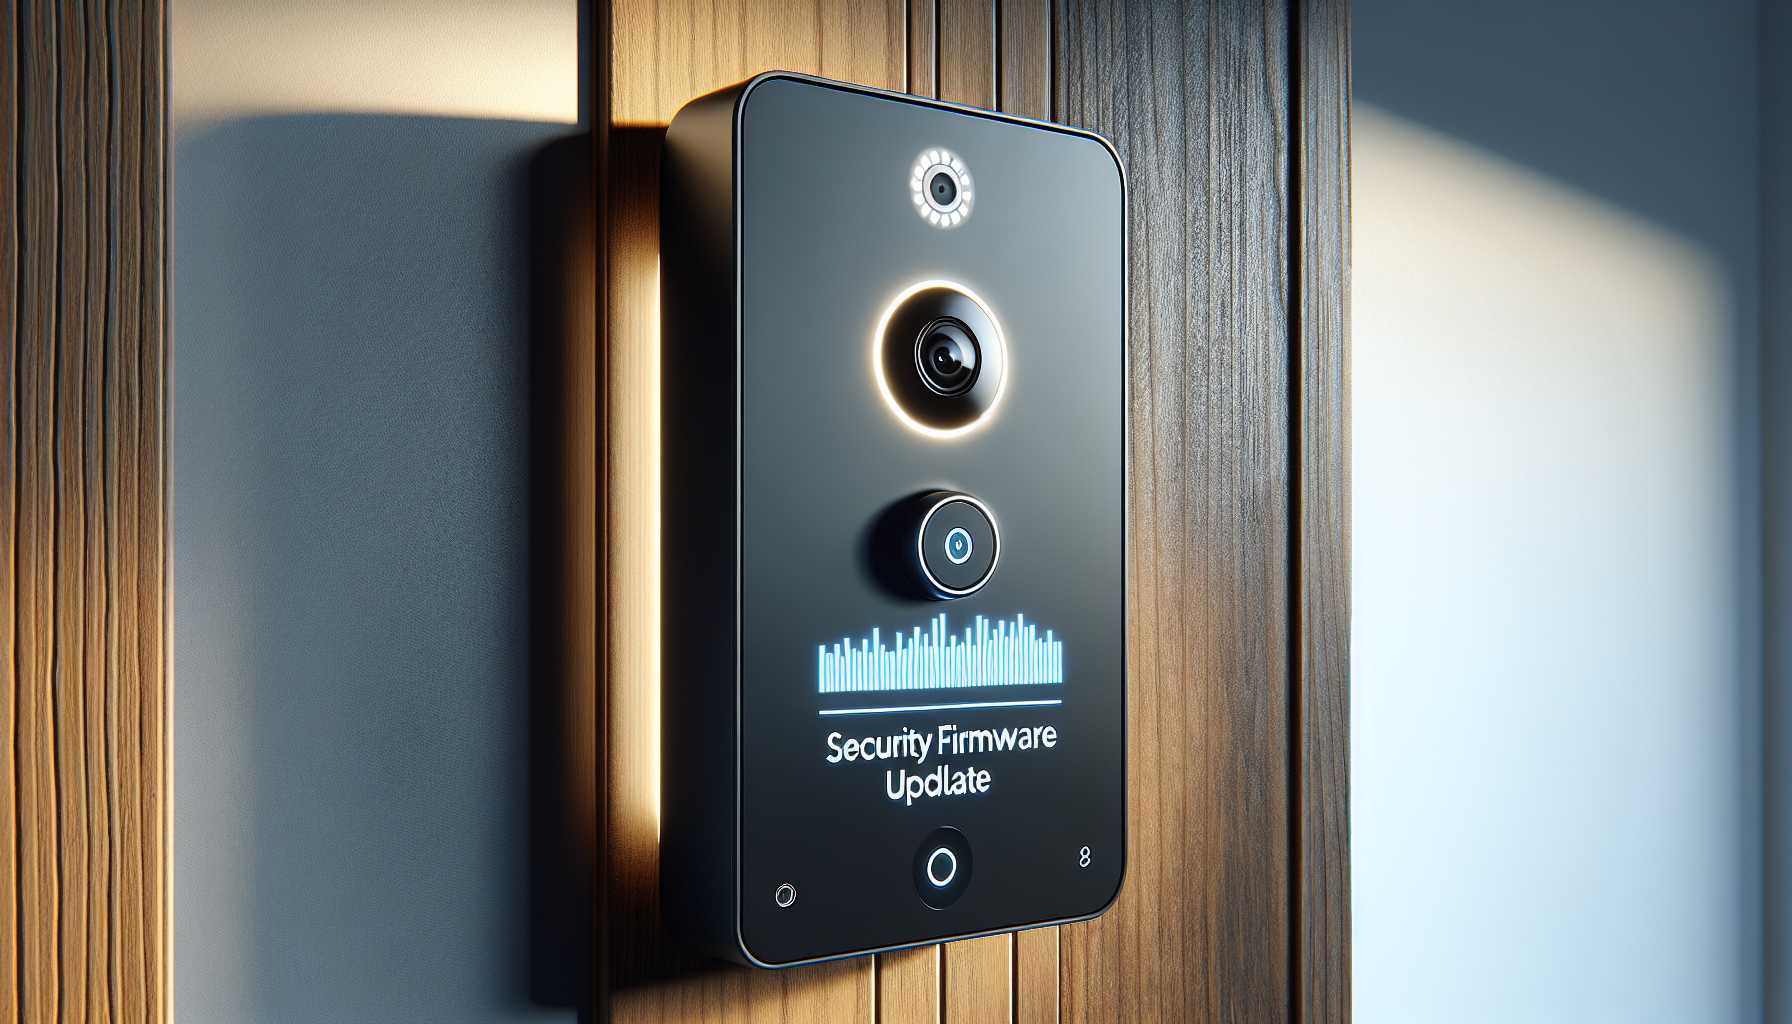 A digital doorbell camera receiving a security firmware update